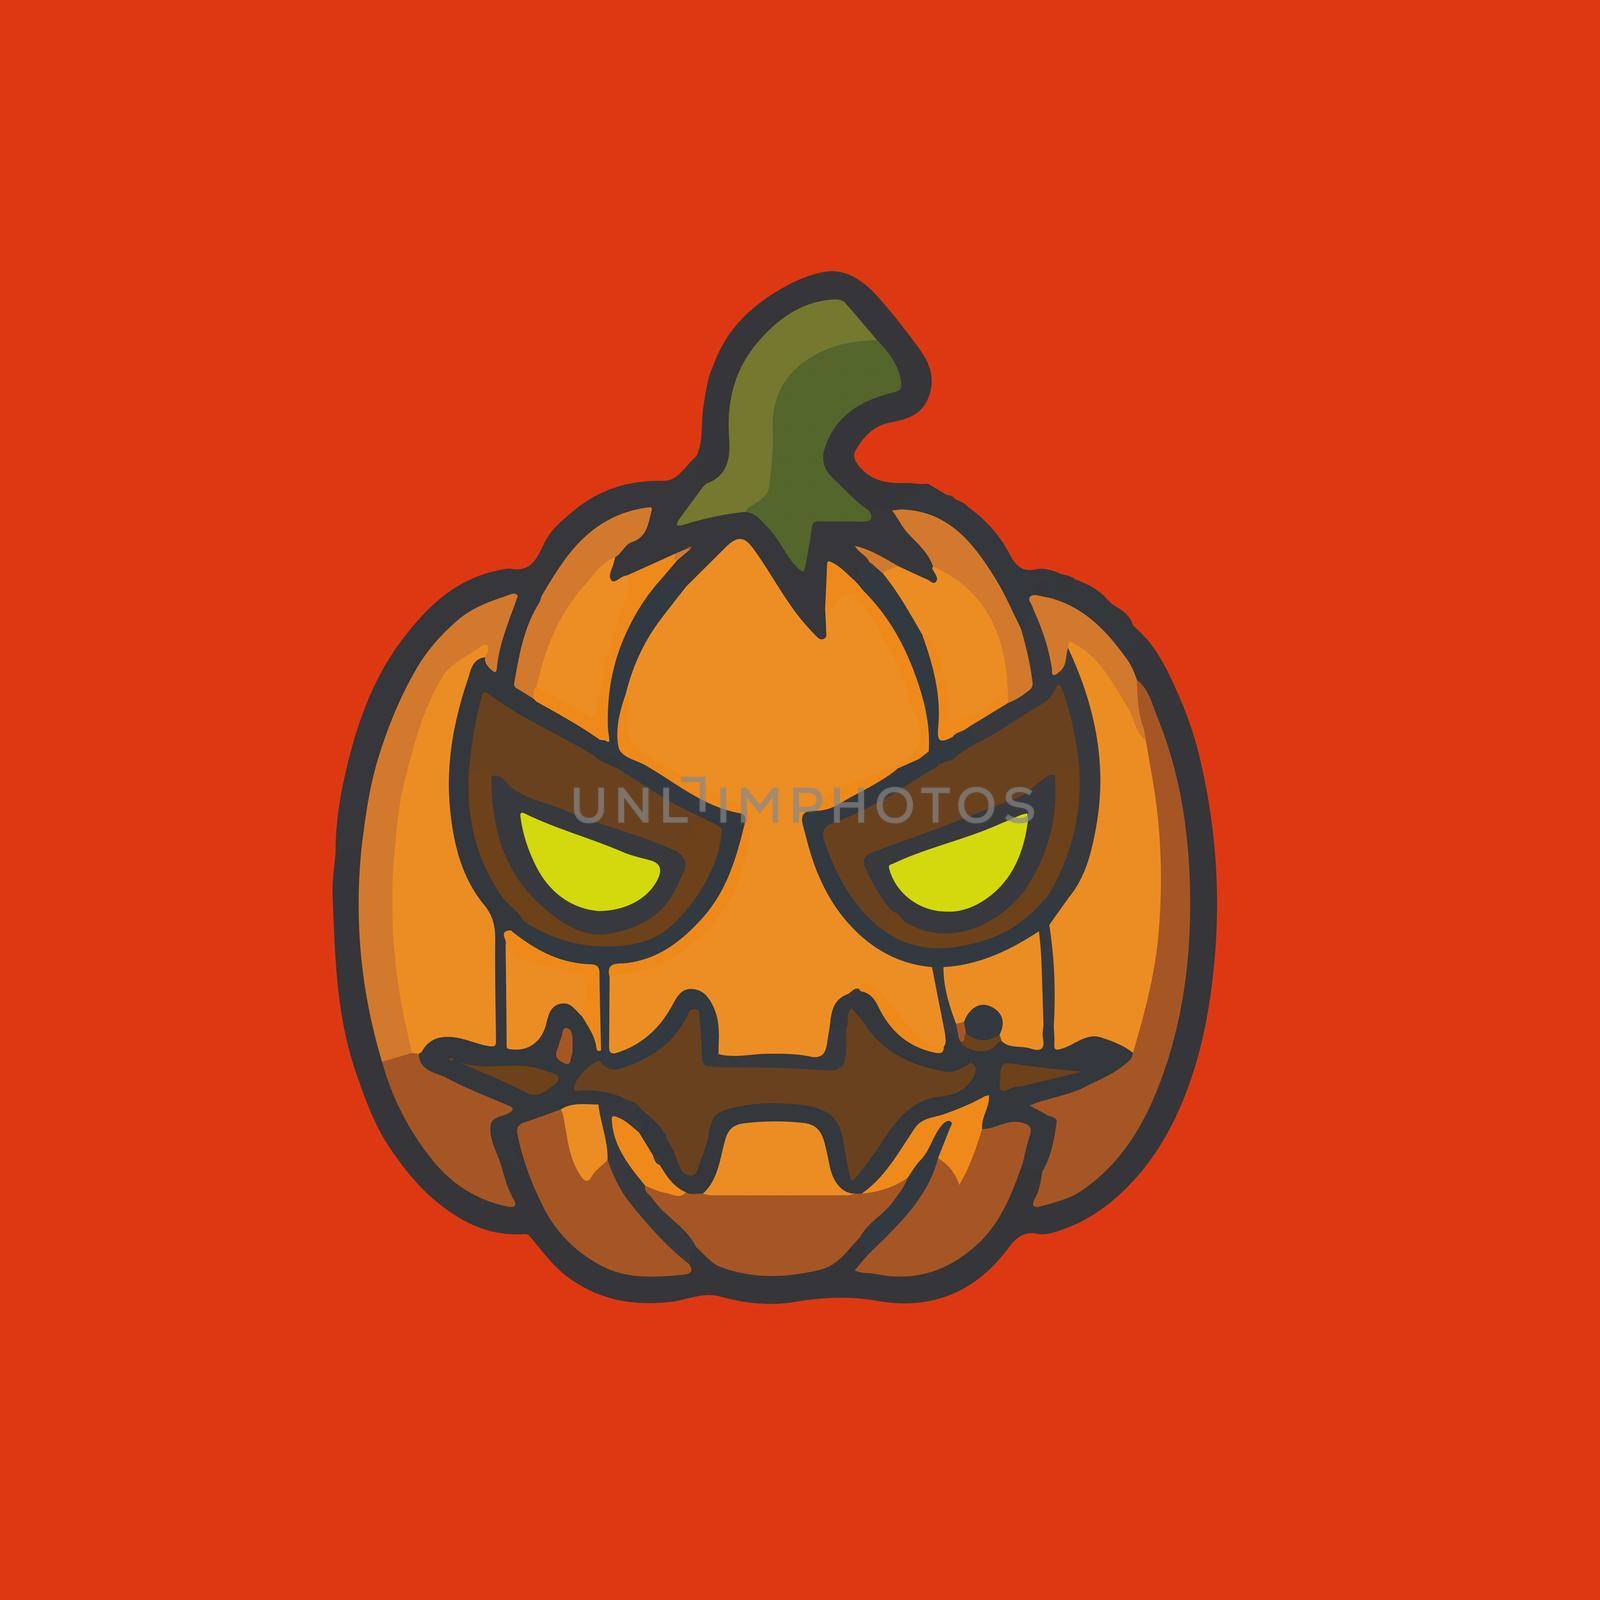 cute halloween evil pumpkin illustration. halloween pumpkin. flat evil pumpkin